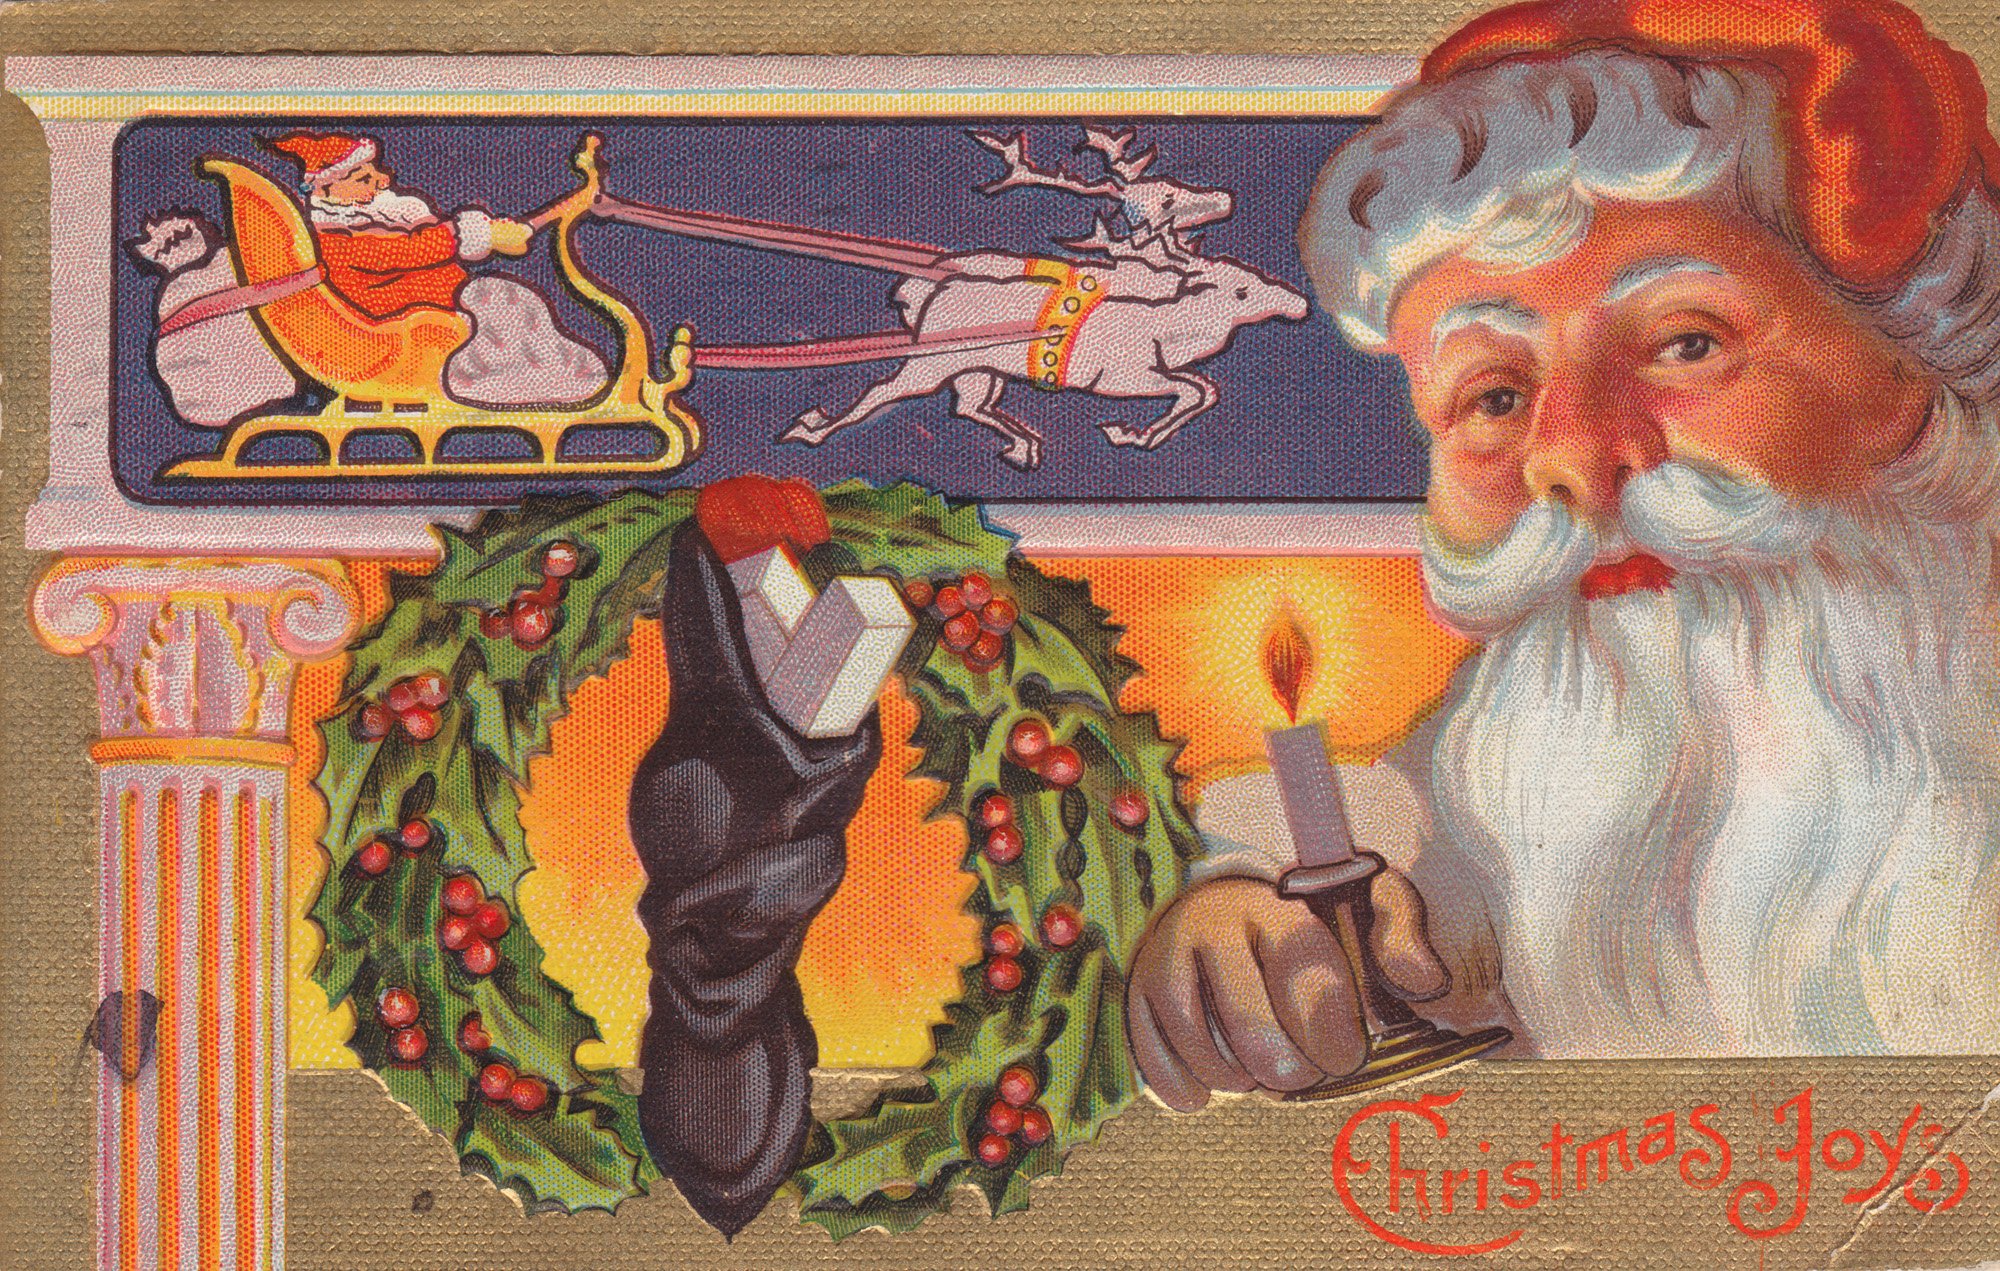 postcard, Paper, Poster, Advertising, Vintage, Retro, Antique, Christmas Wallpaper